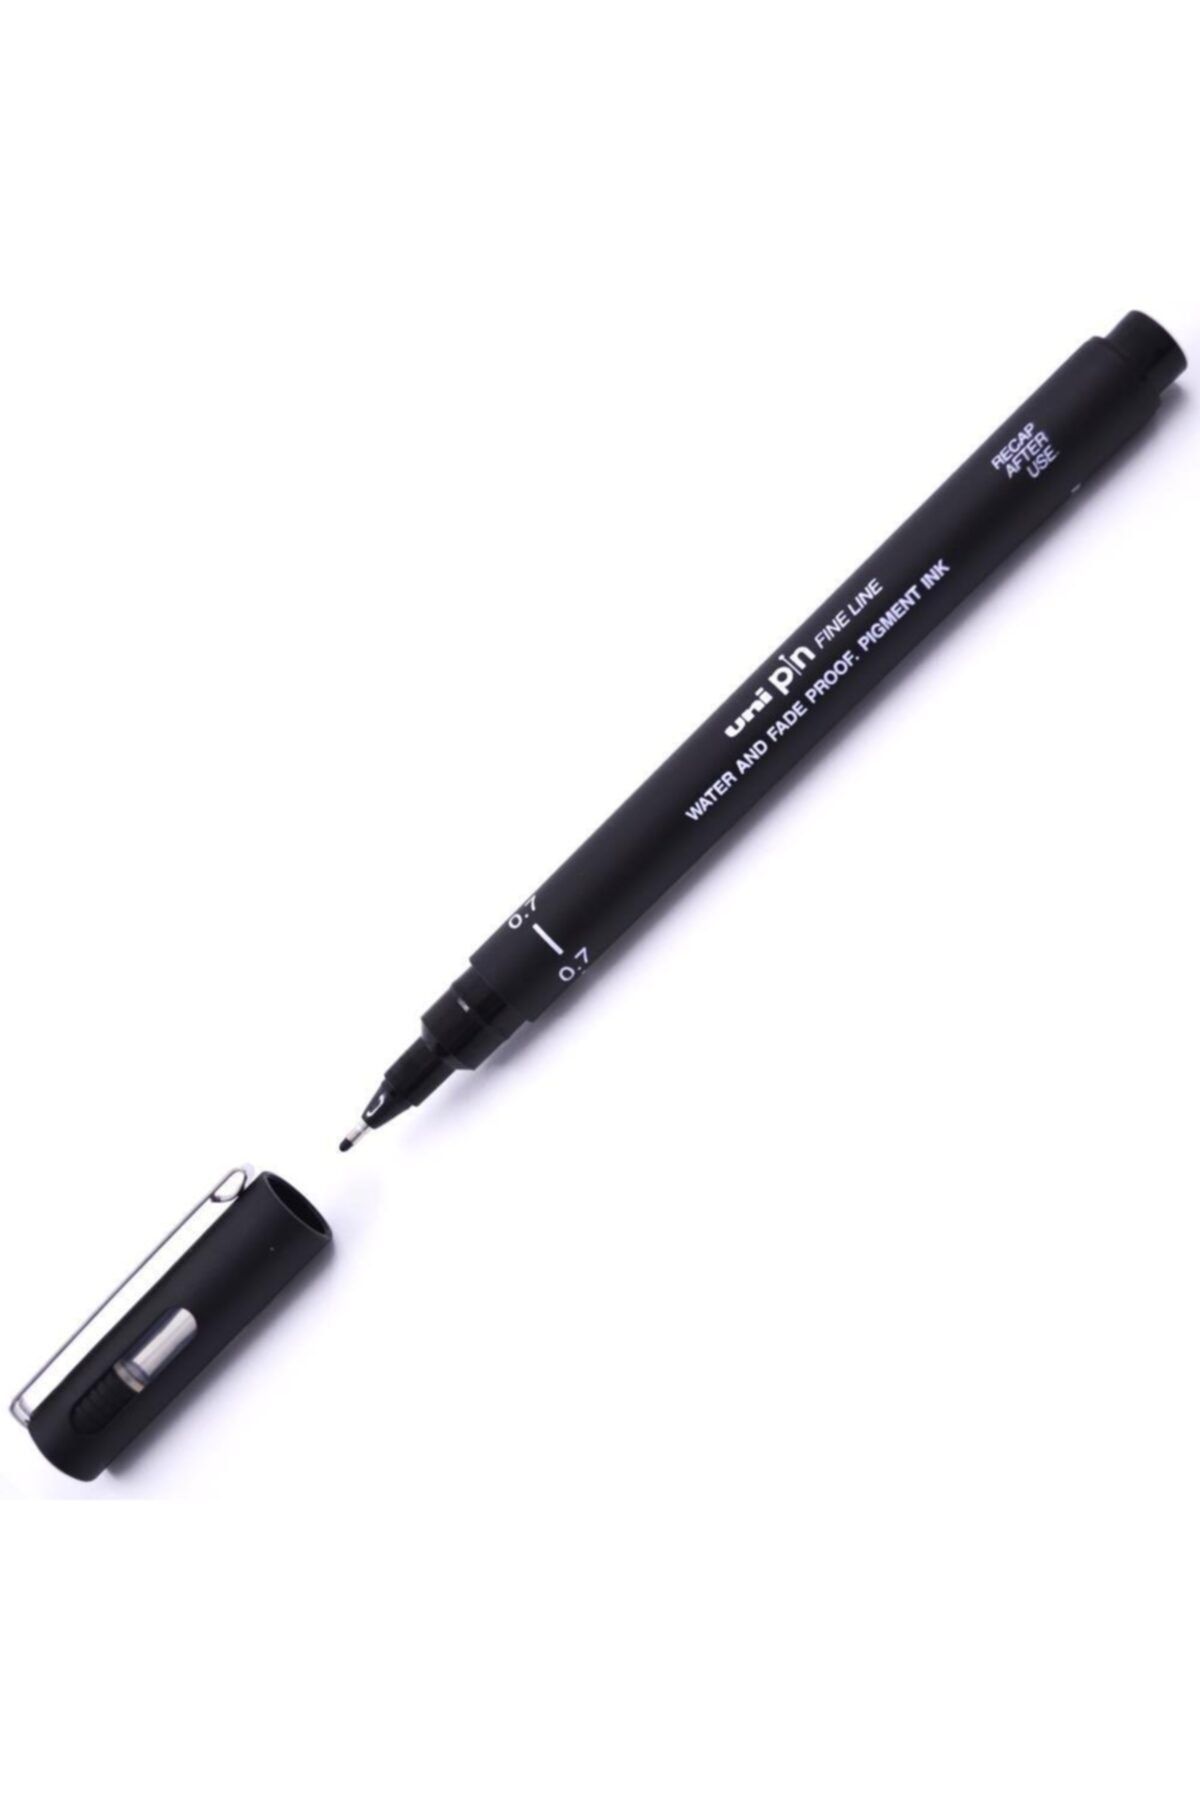 Uni -ball Pin Fine Line Teknik Çizim Kalemi 0.7 Mm Siyah